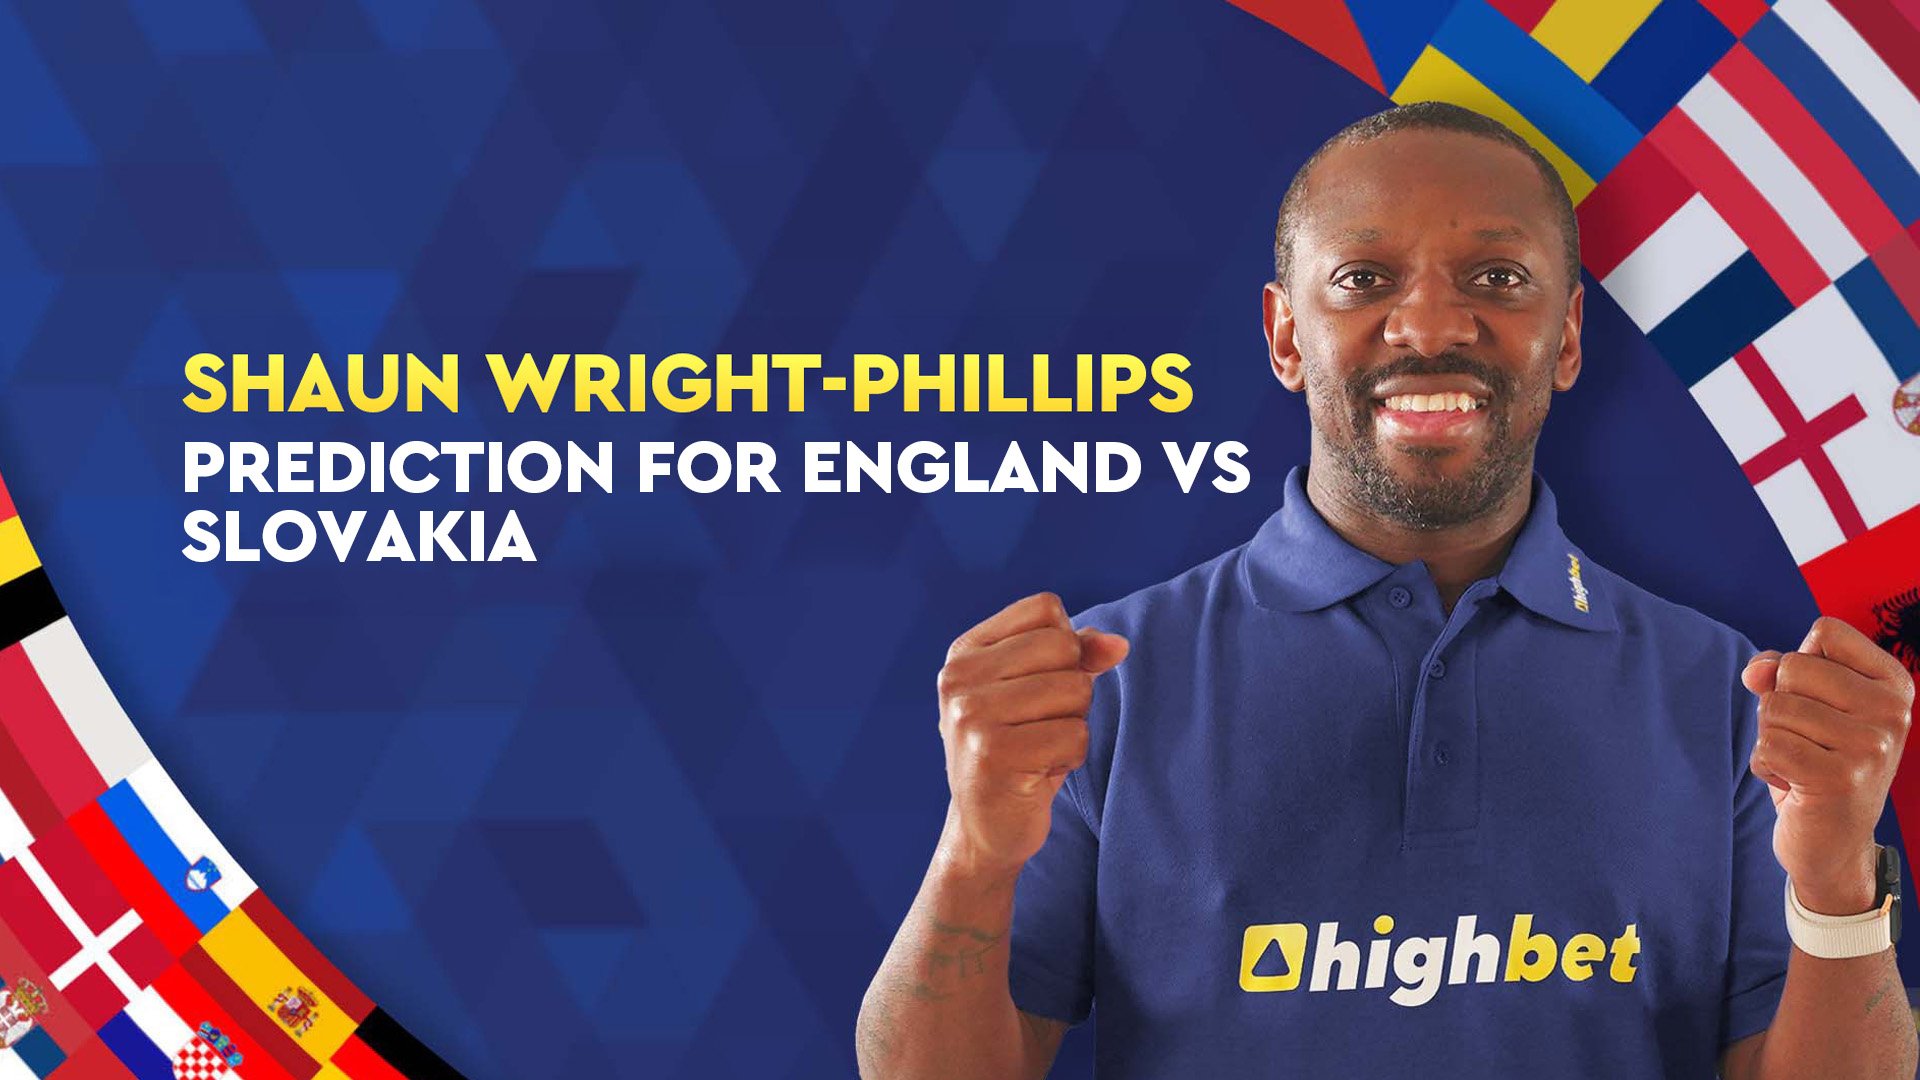 Video: Shaun Wright-Phillips prediction England vs Slovakia